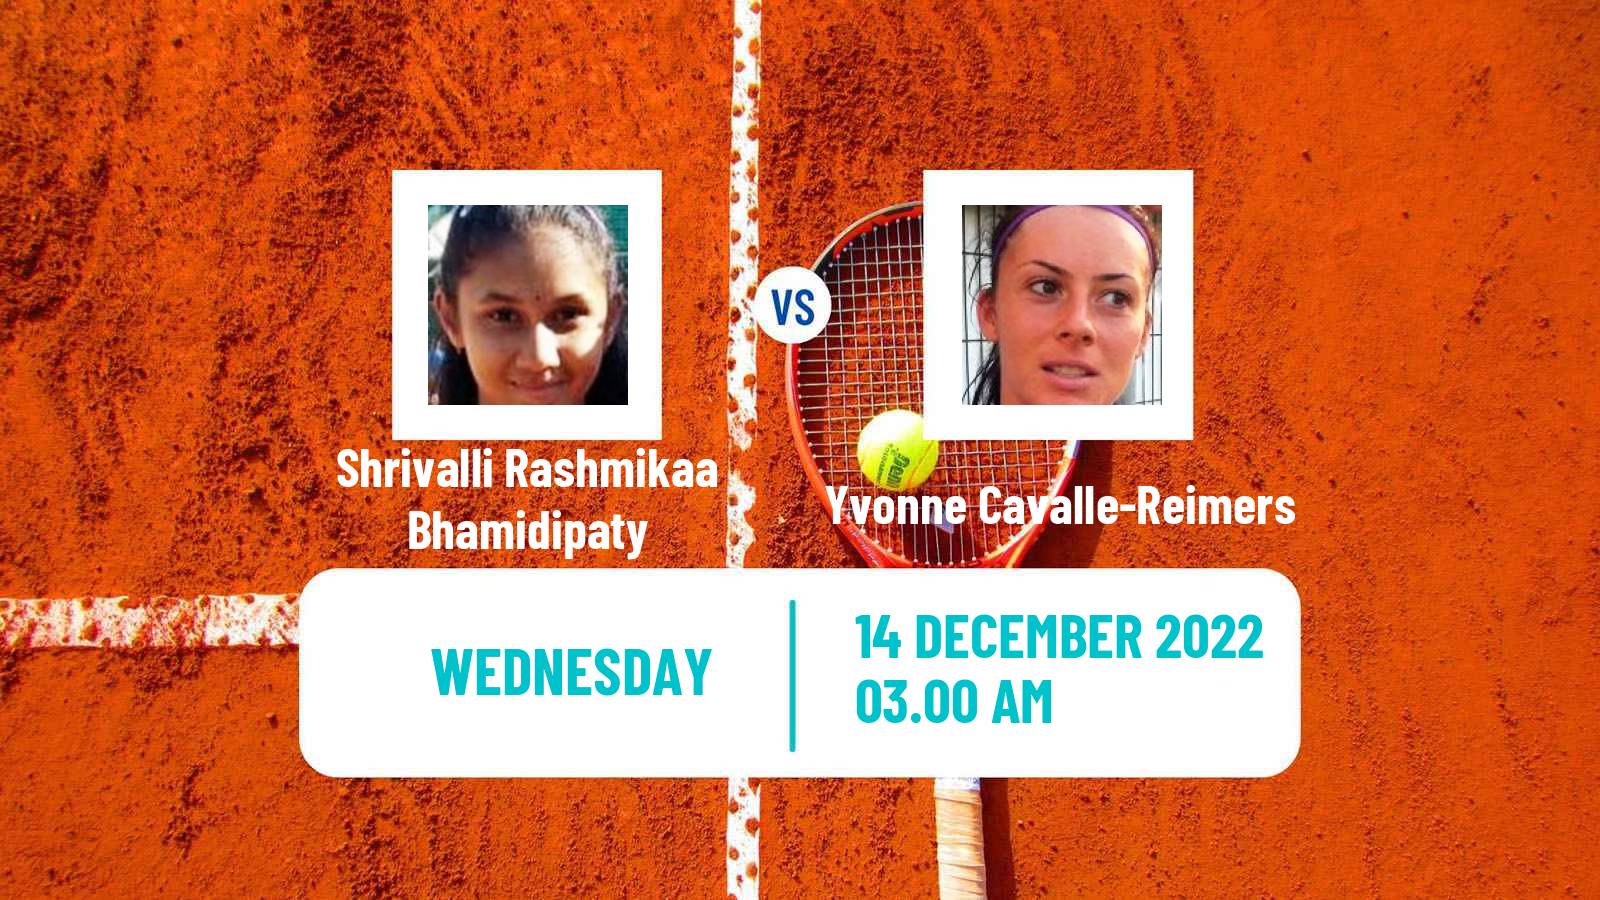 Tennis ITF Tournaments Shrivalli Rashmikaa Bhamidipaty - Yvonne Cavalle-Reimers